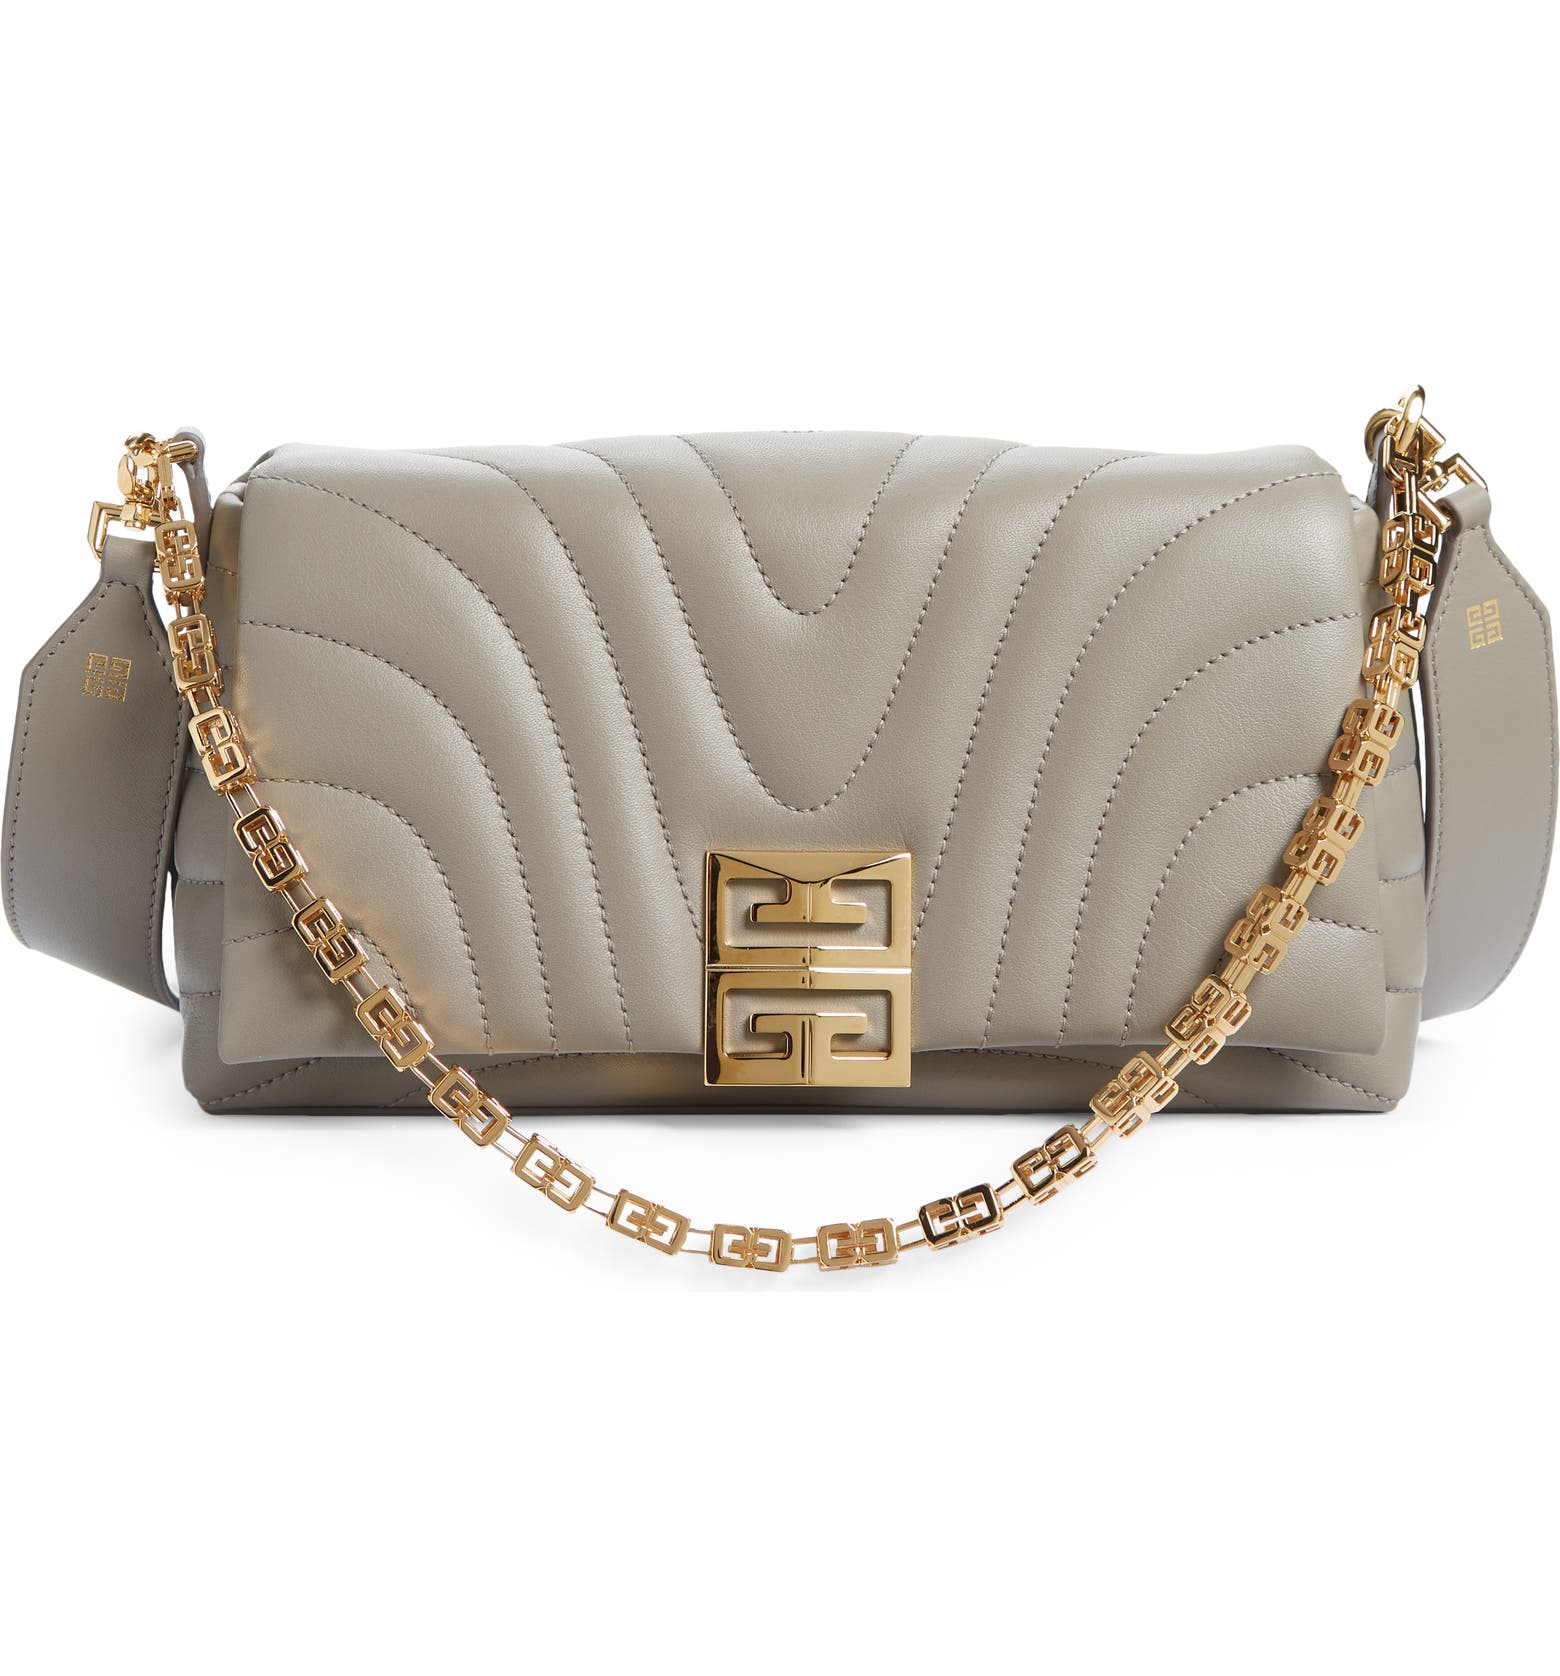 Top Luxury Handbag Brands: Givenchy